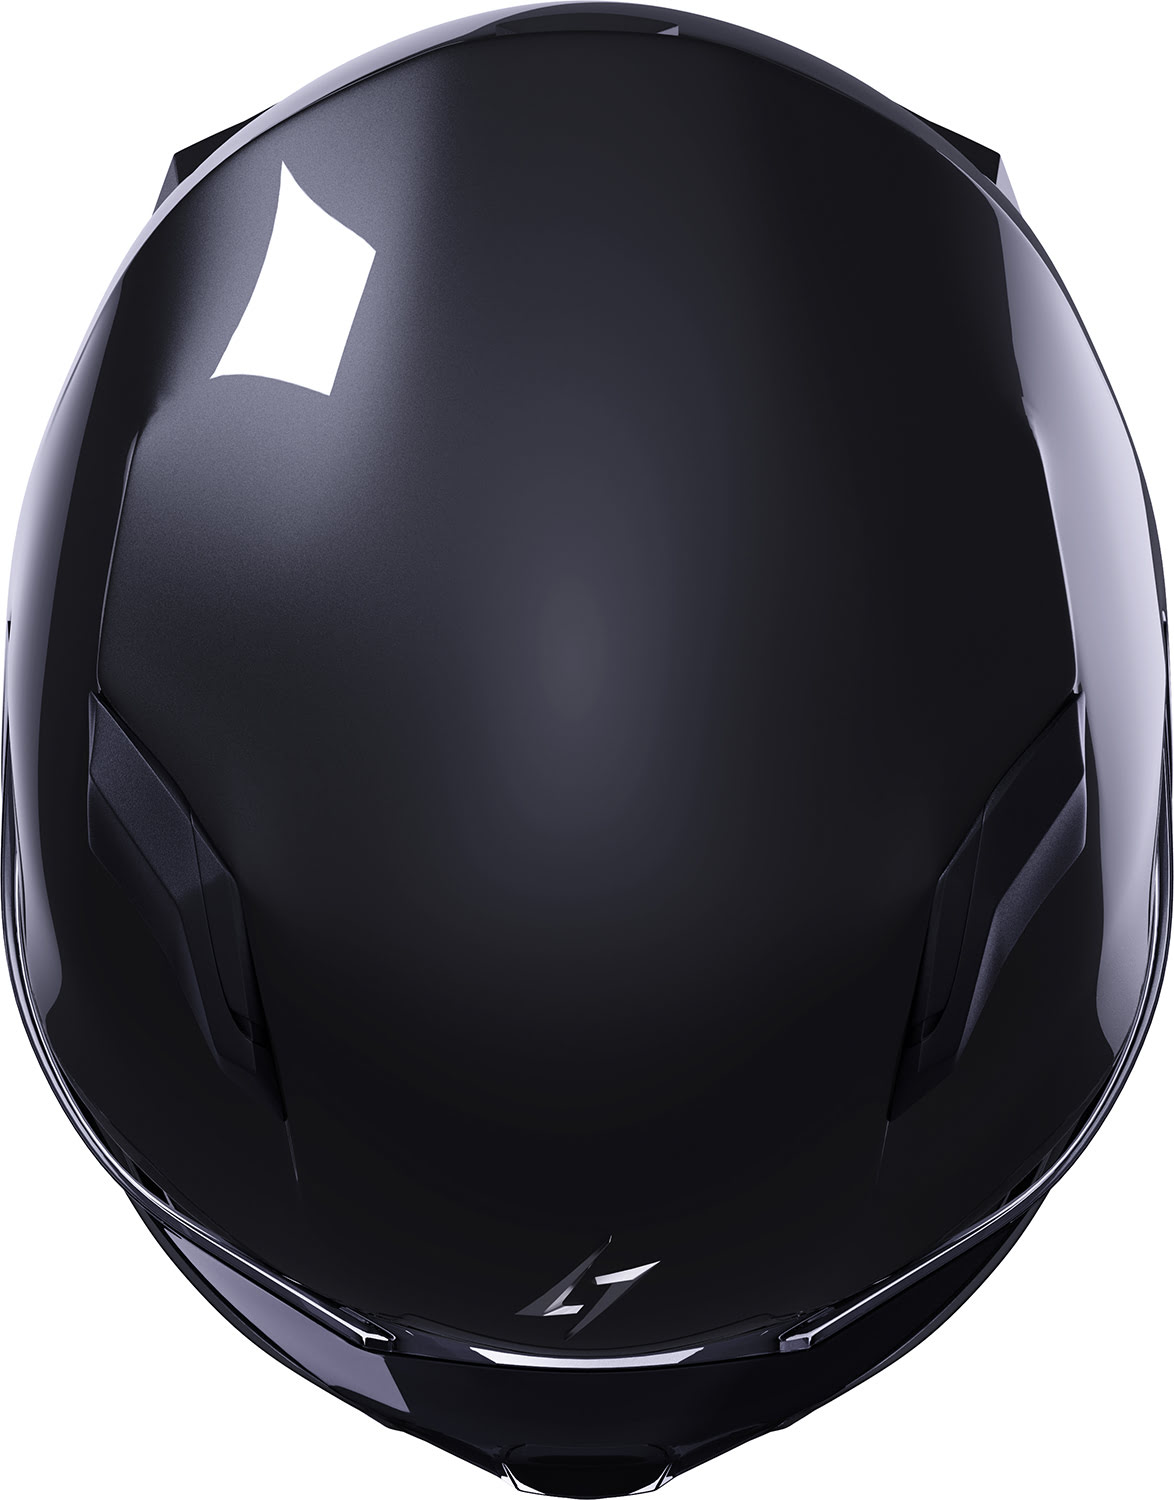 Helmet WISE SOLID Black Pearly STORMER 